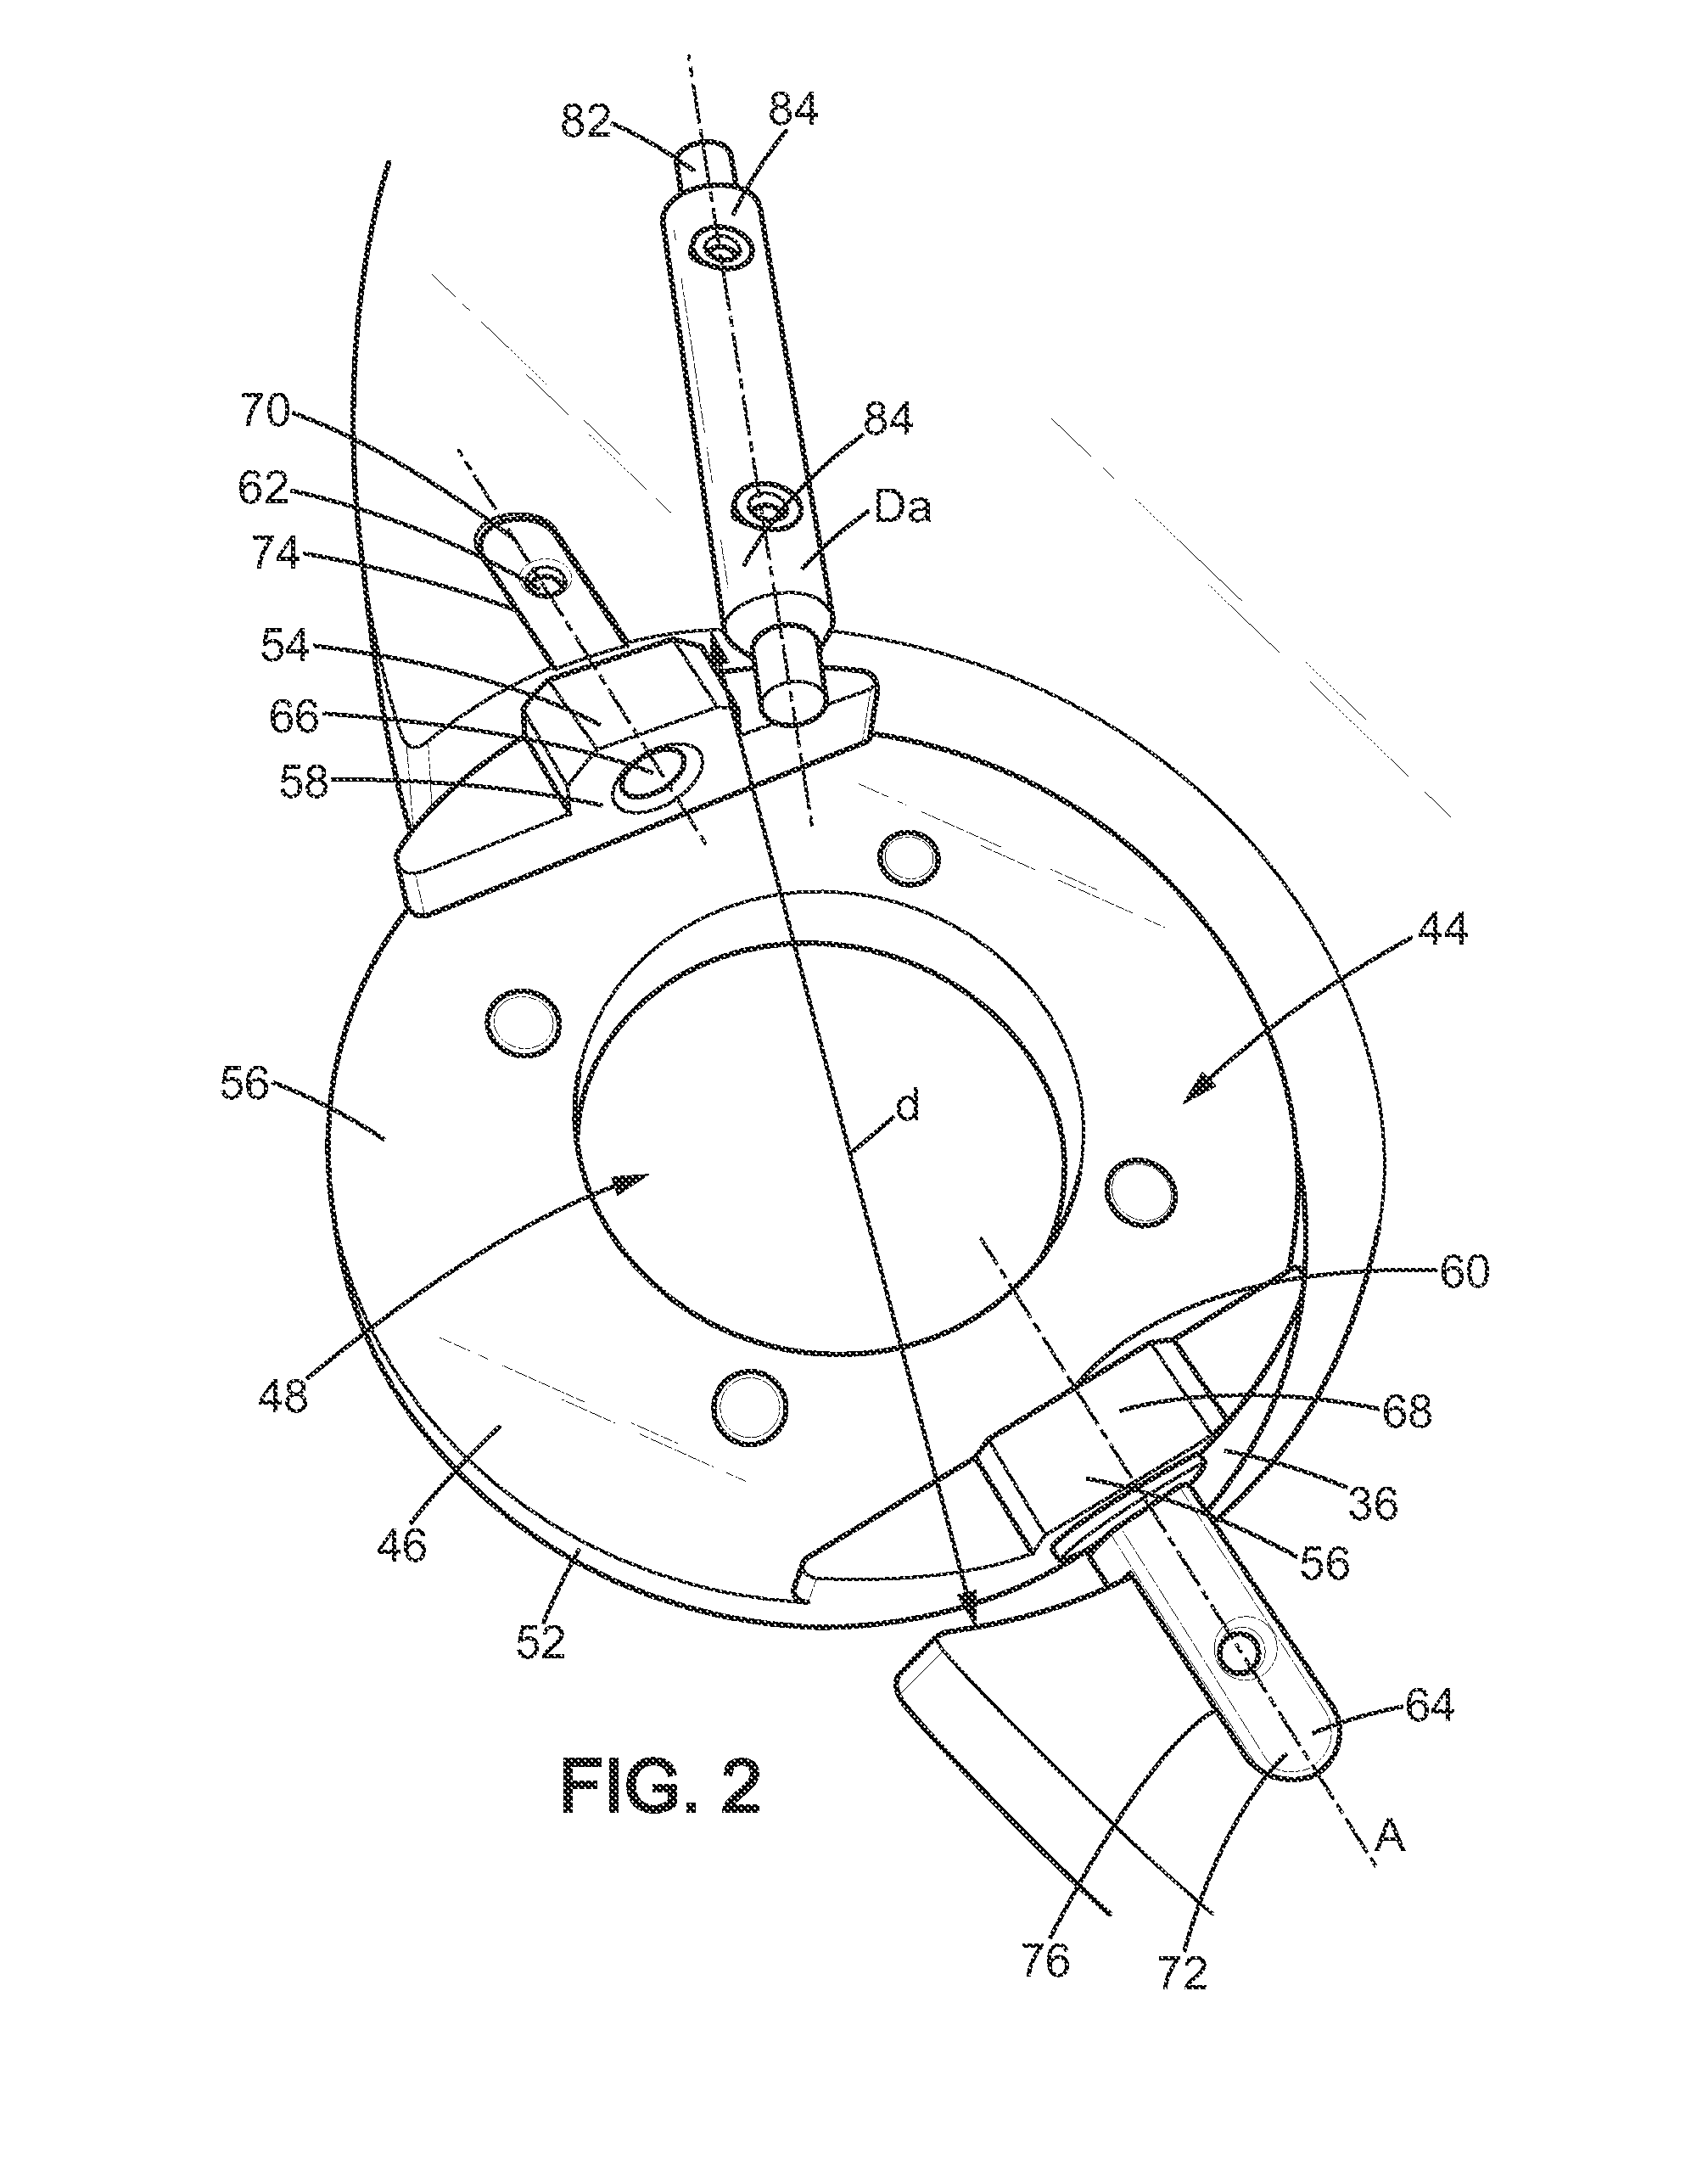 Shaking and centrifuging device